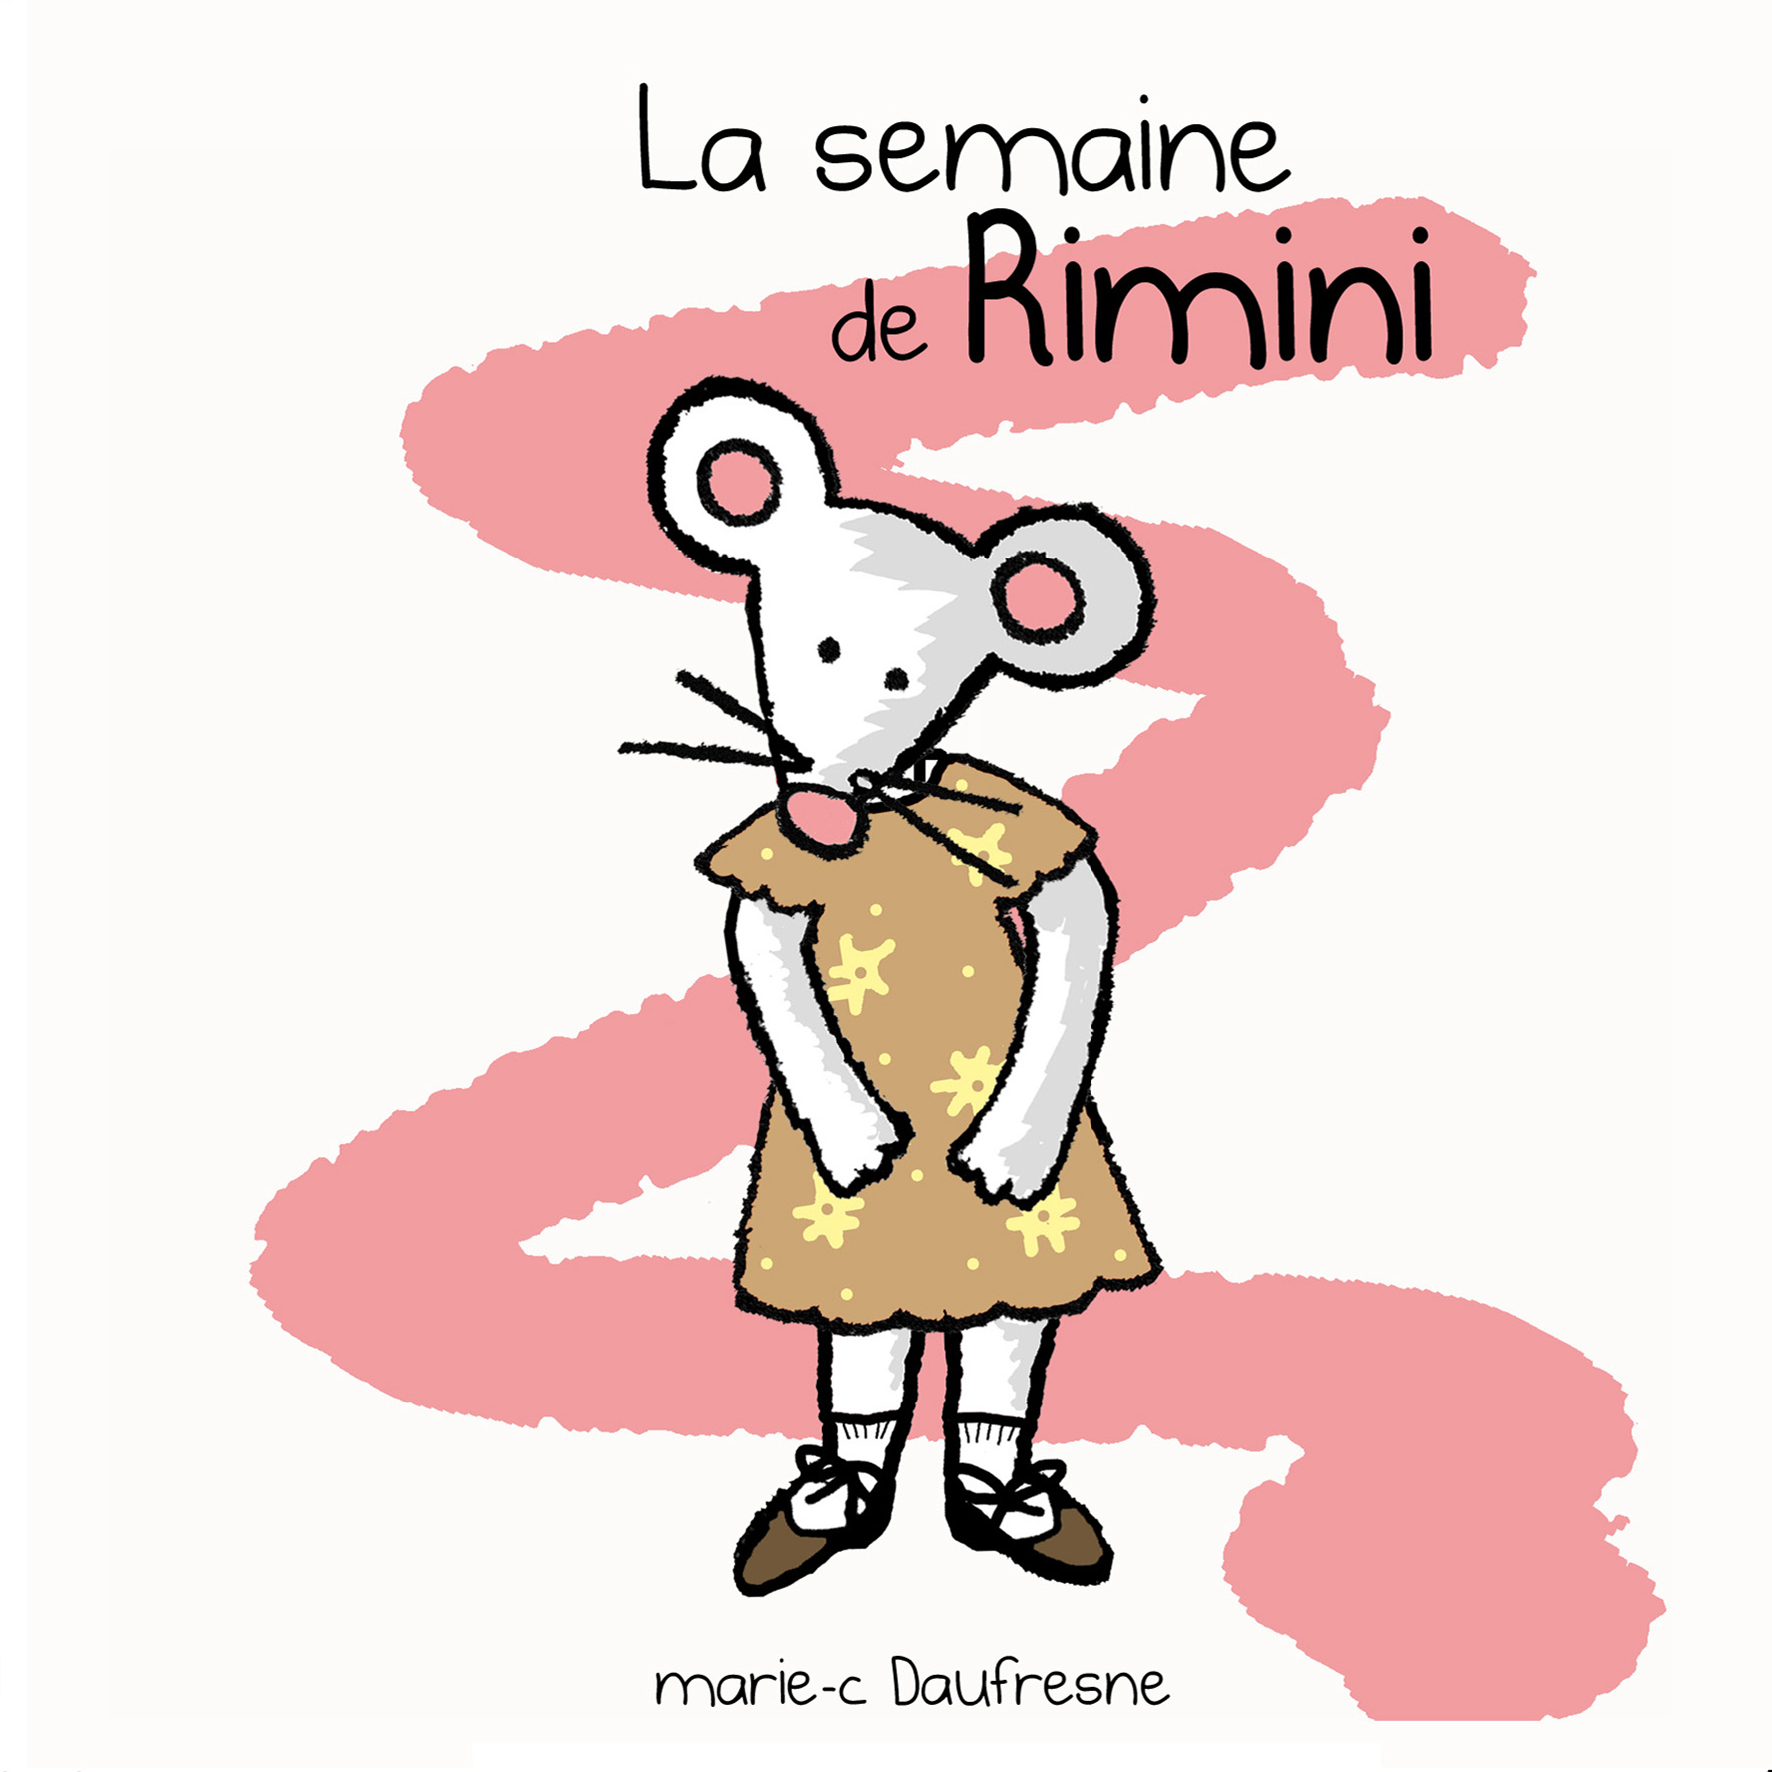 La semaine de Rimini